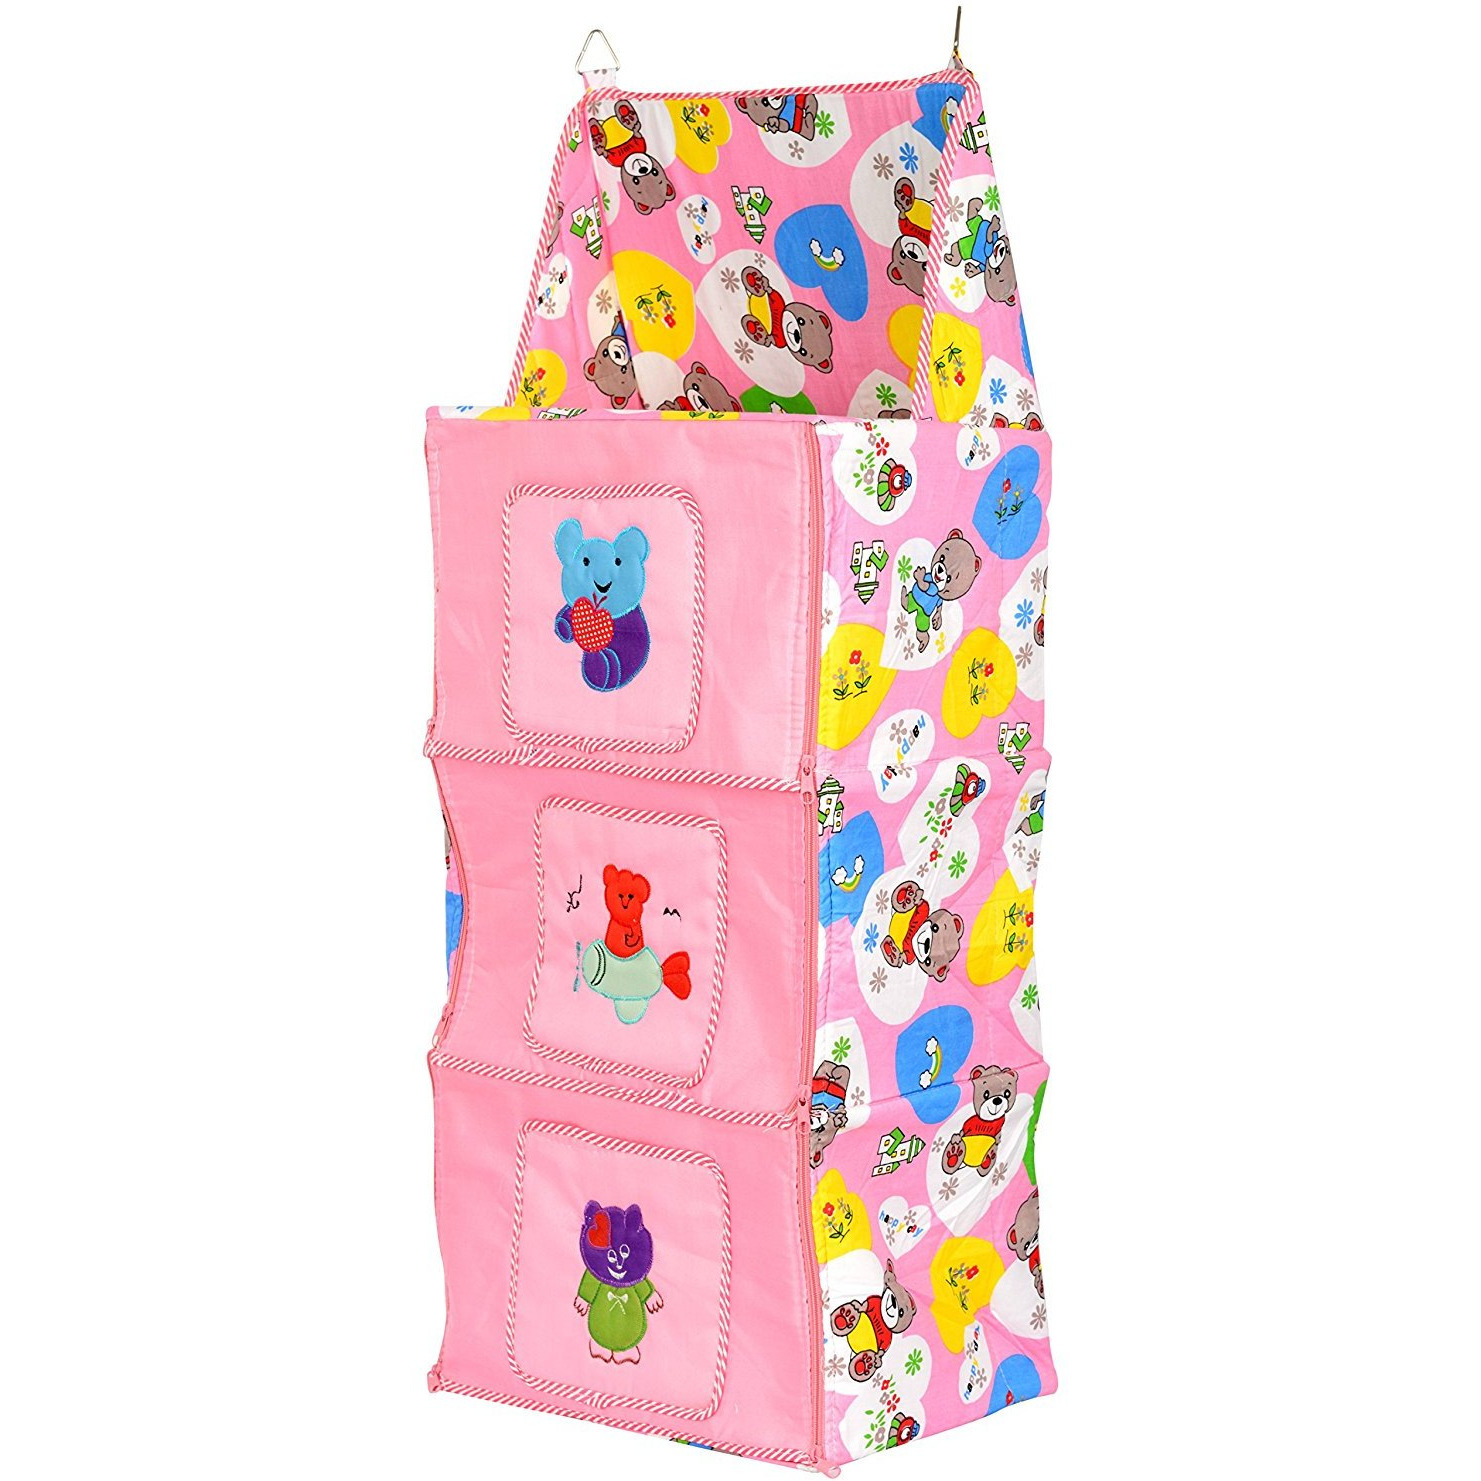 Love Baby Small Teddy Bear Kids Cupboard 3 Step - DKBC17 Pink